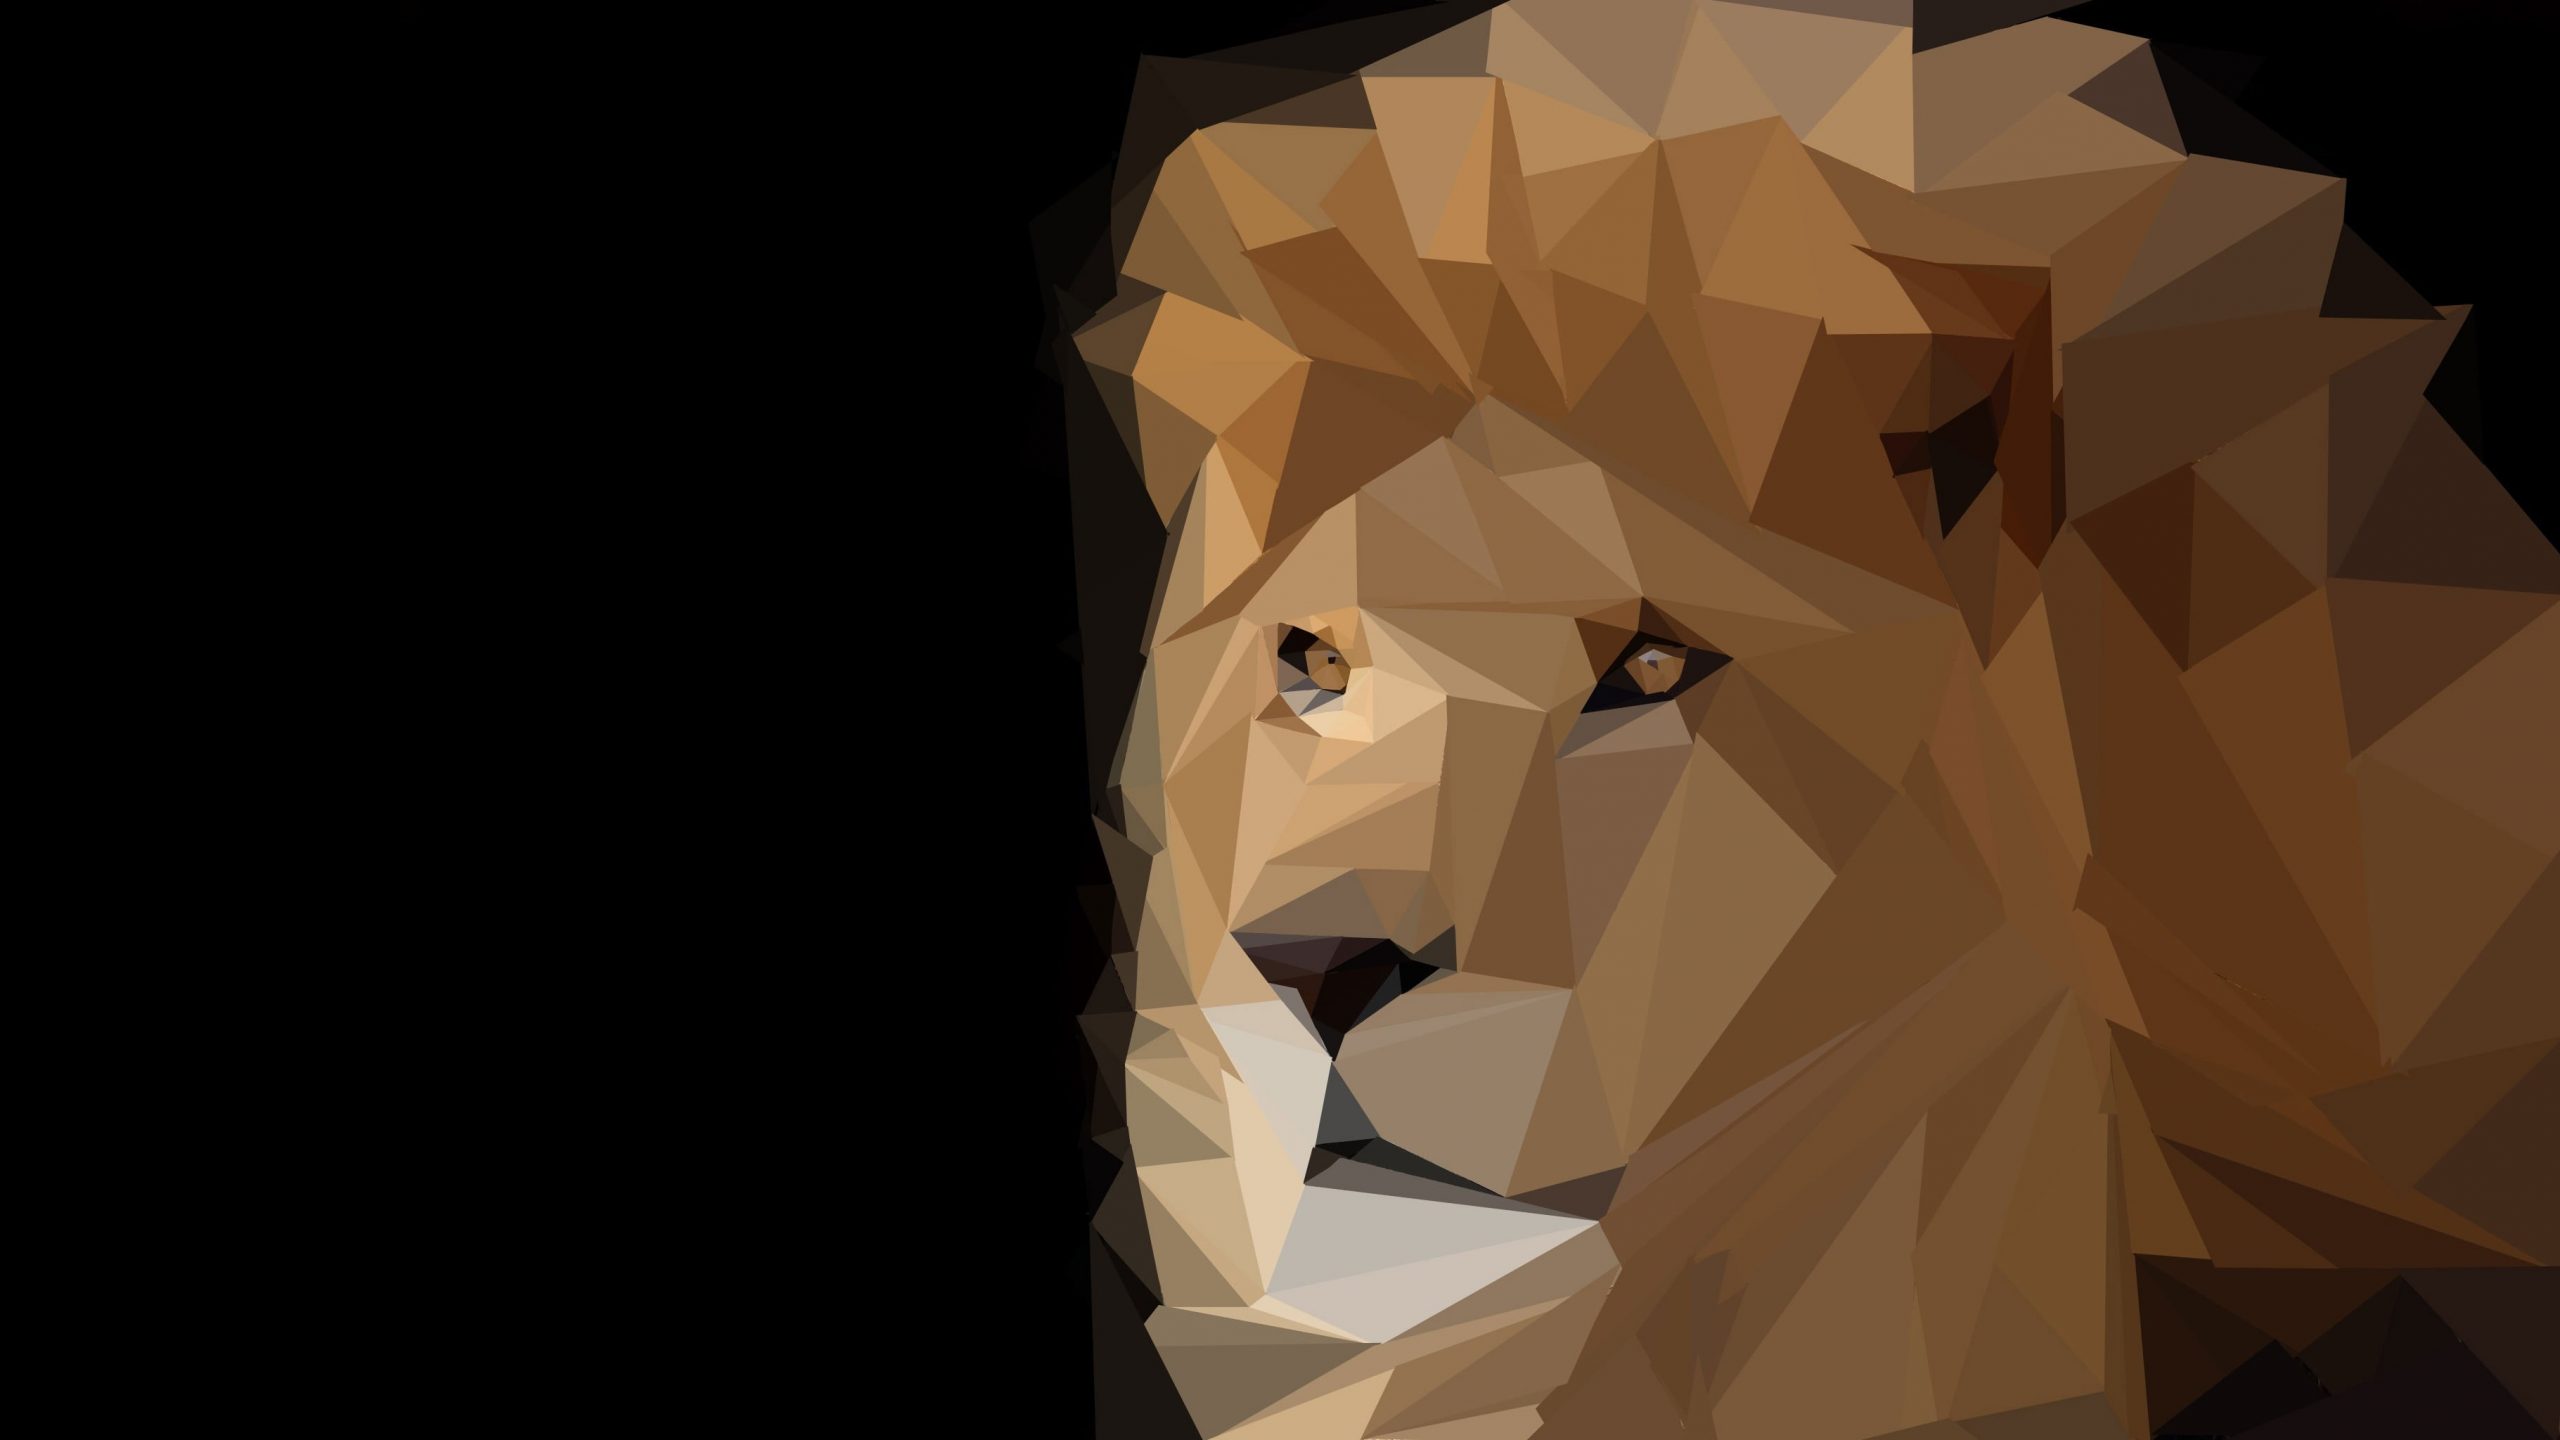 Brown lion illustration wallpaper, animals, low poly, digital art, artwork